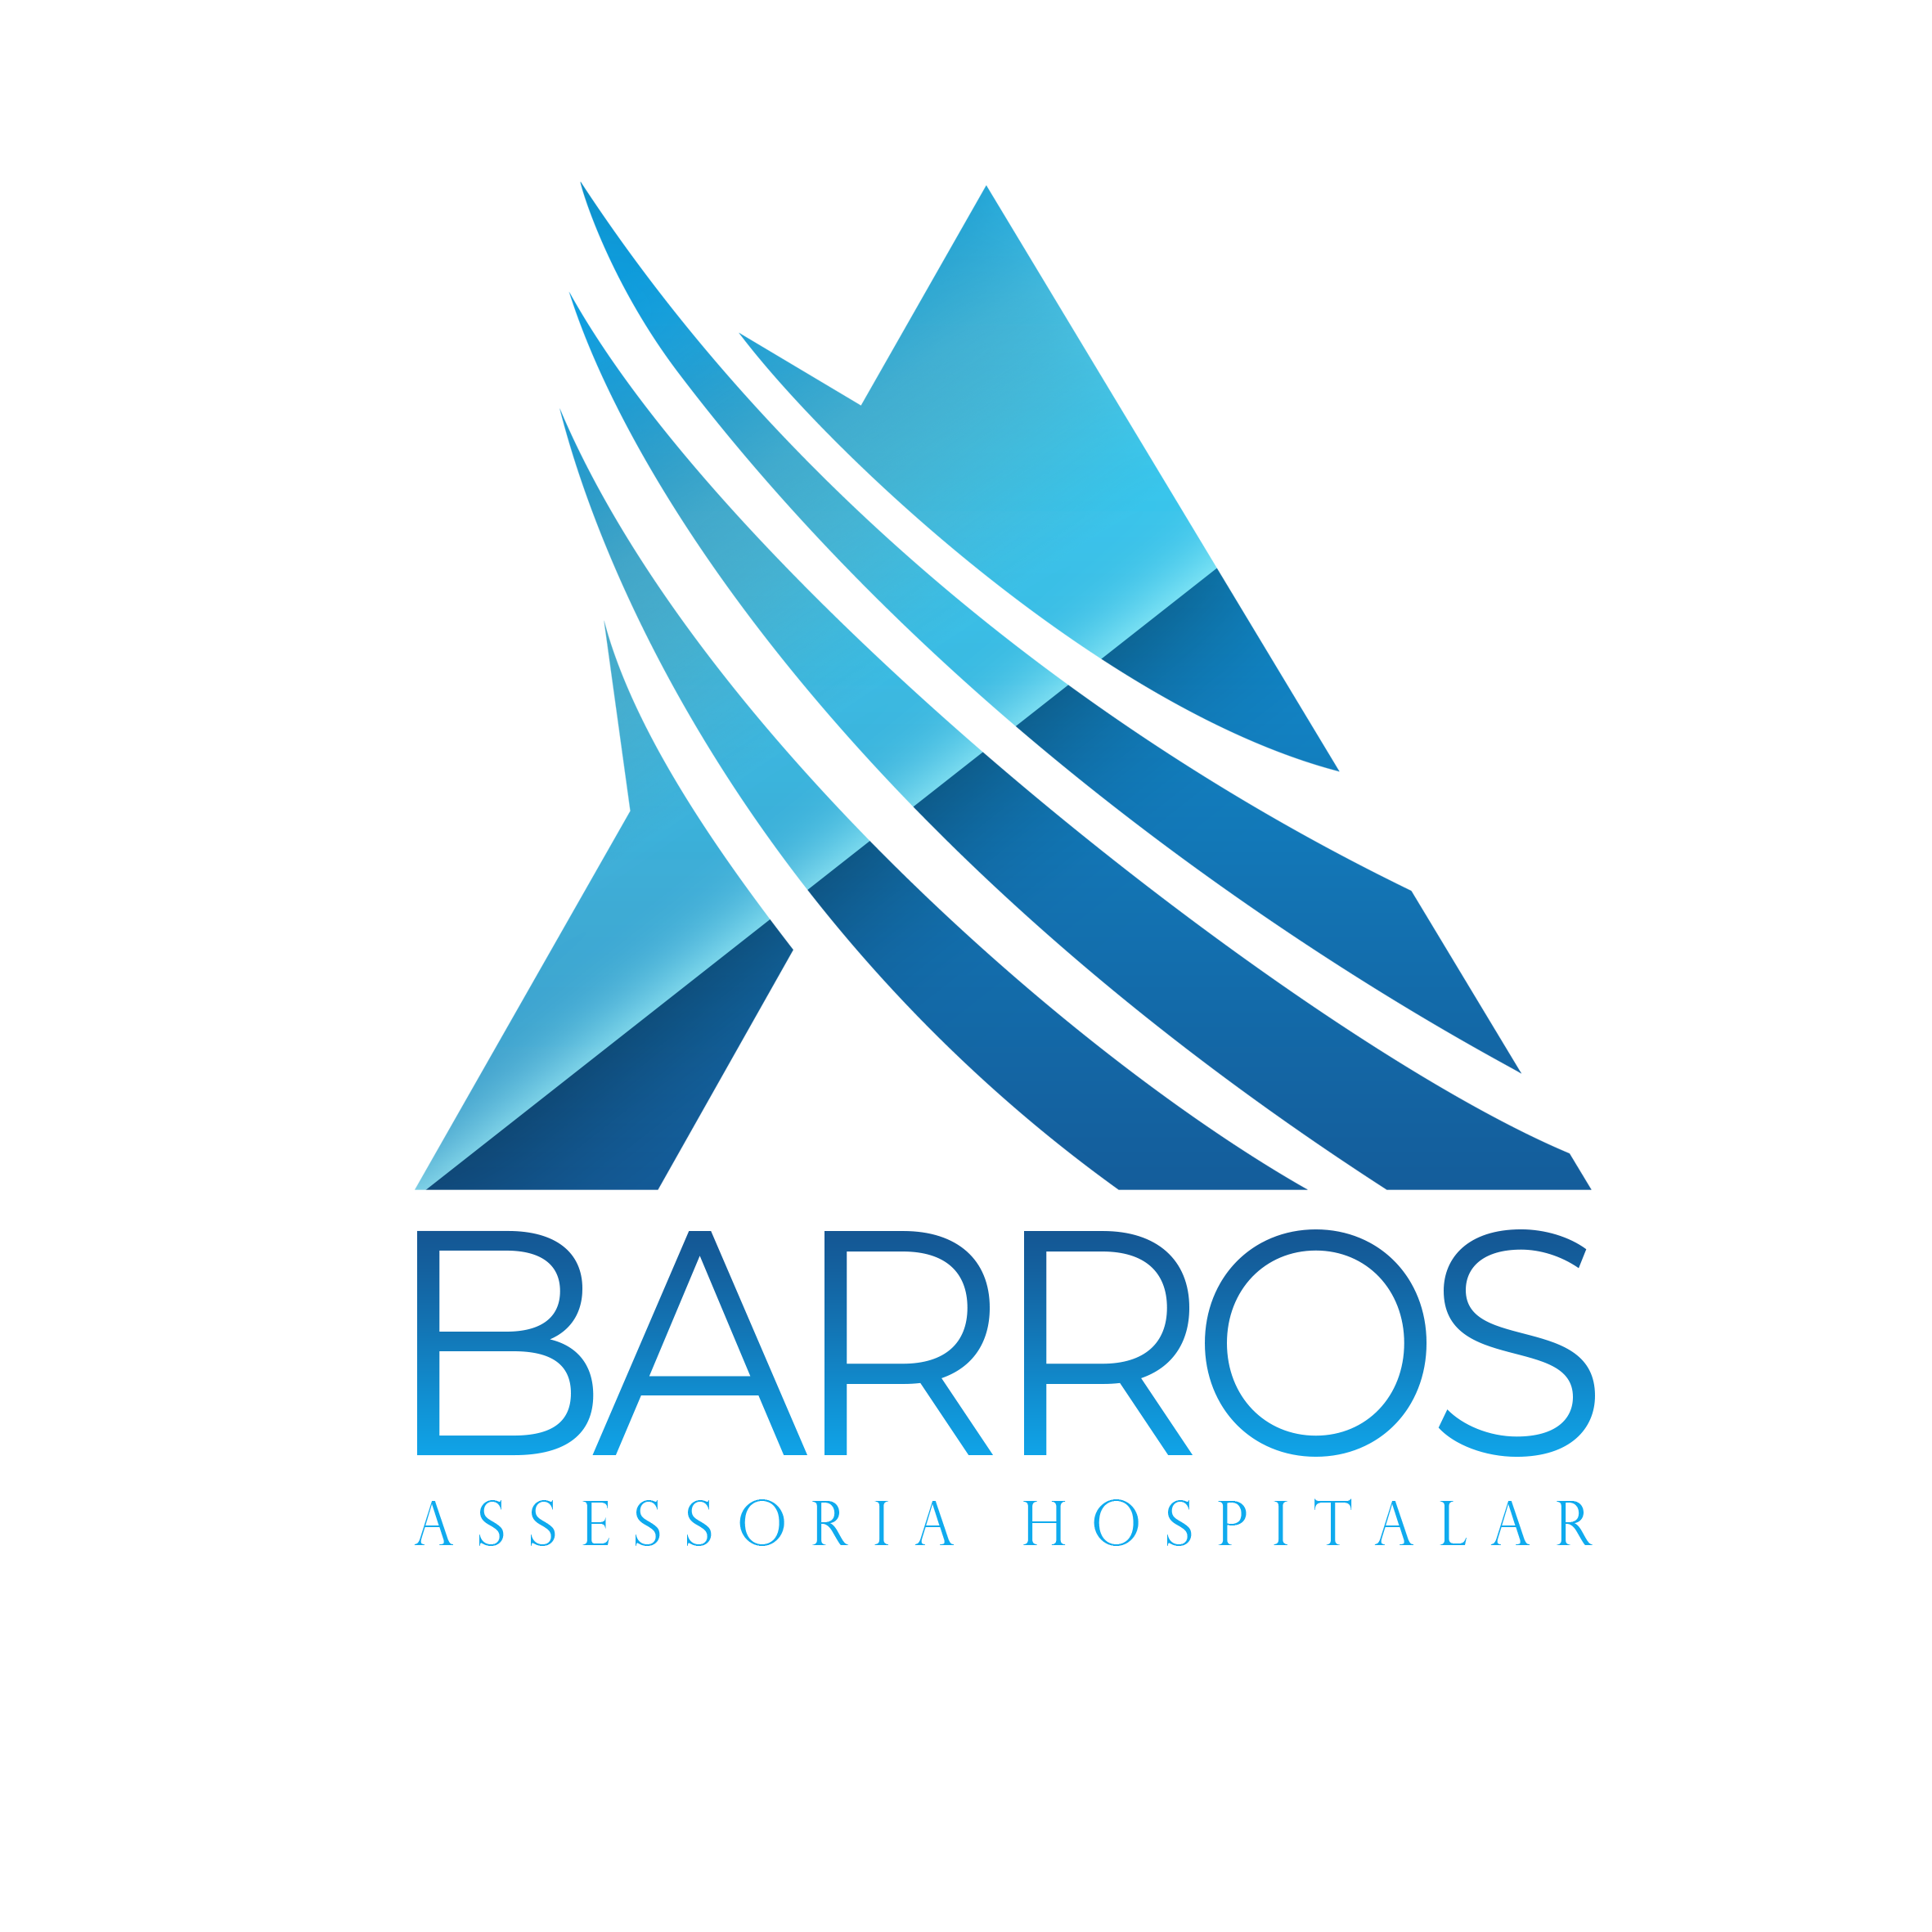 A barros : Brand Short Description Type Here.